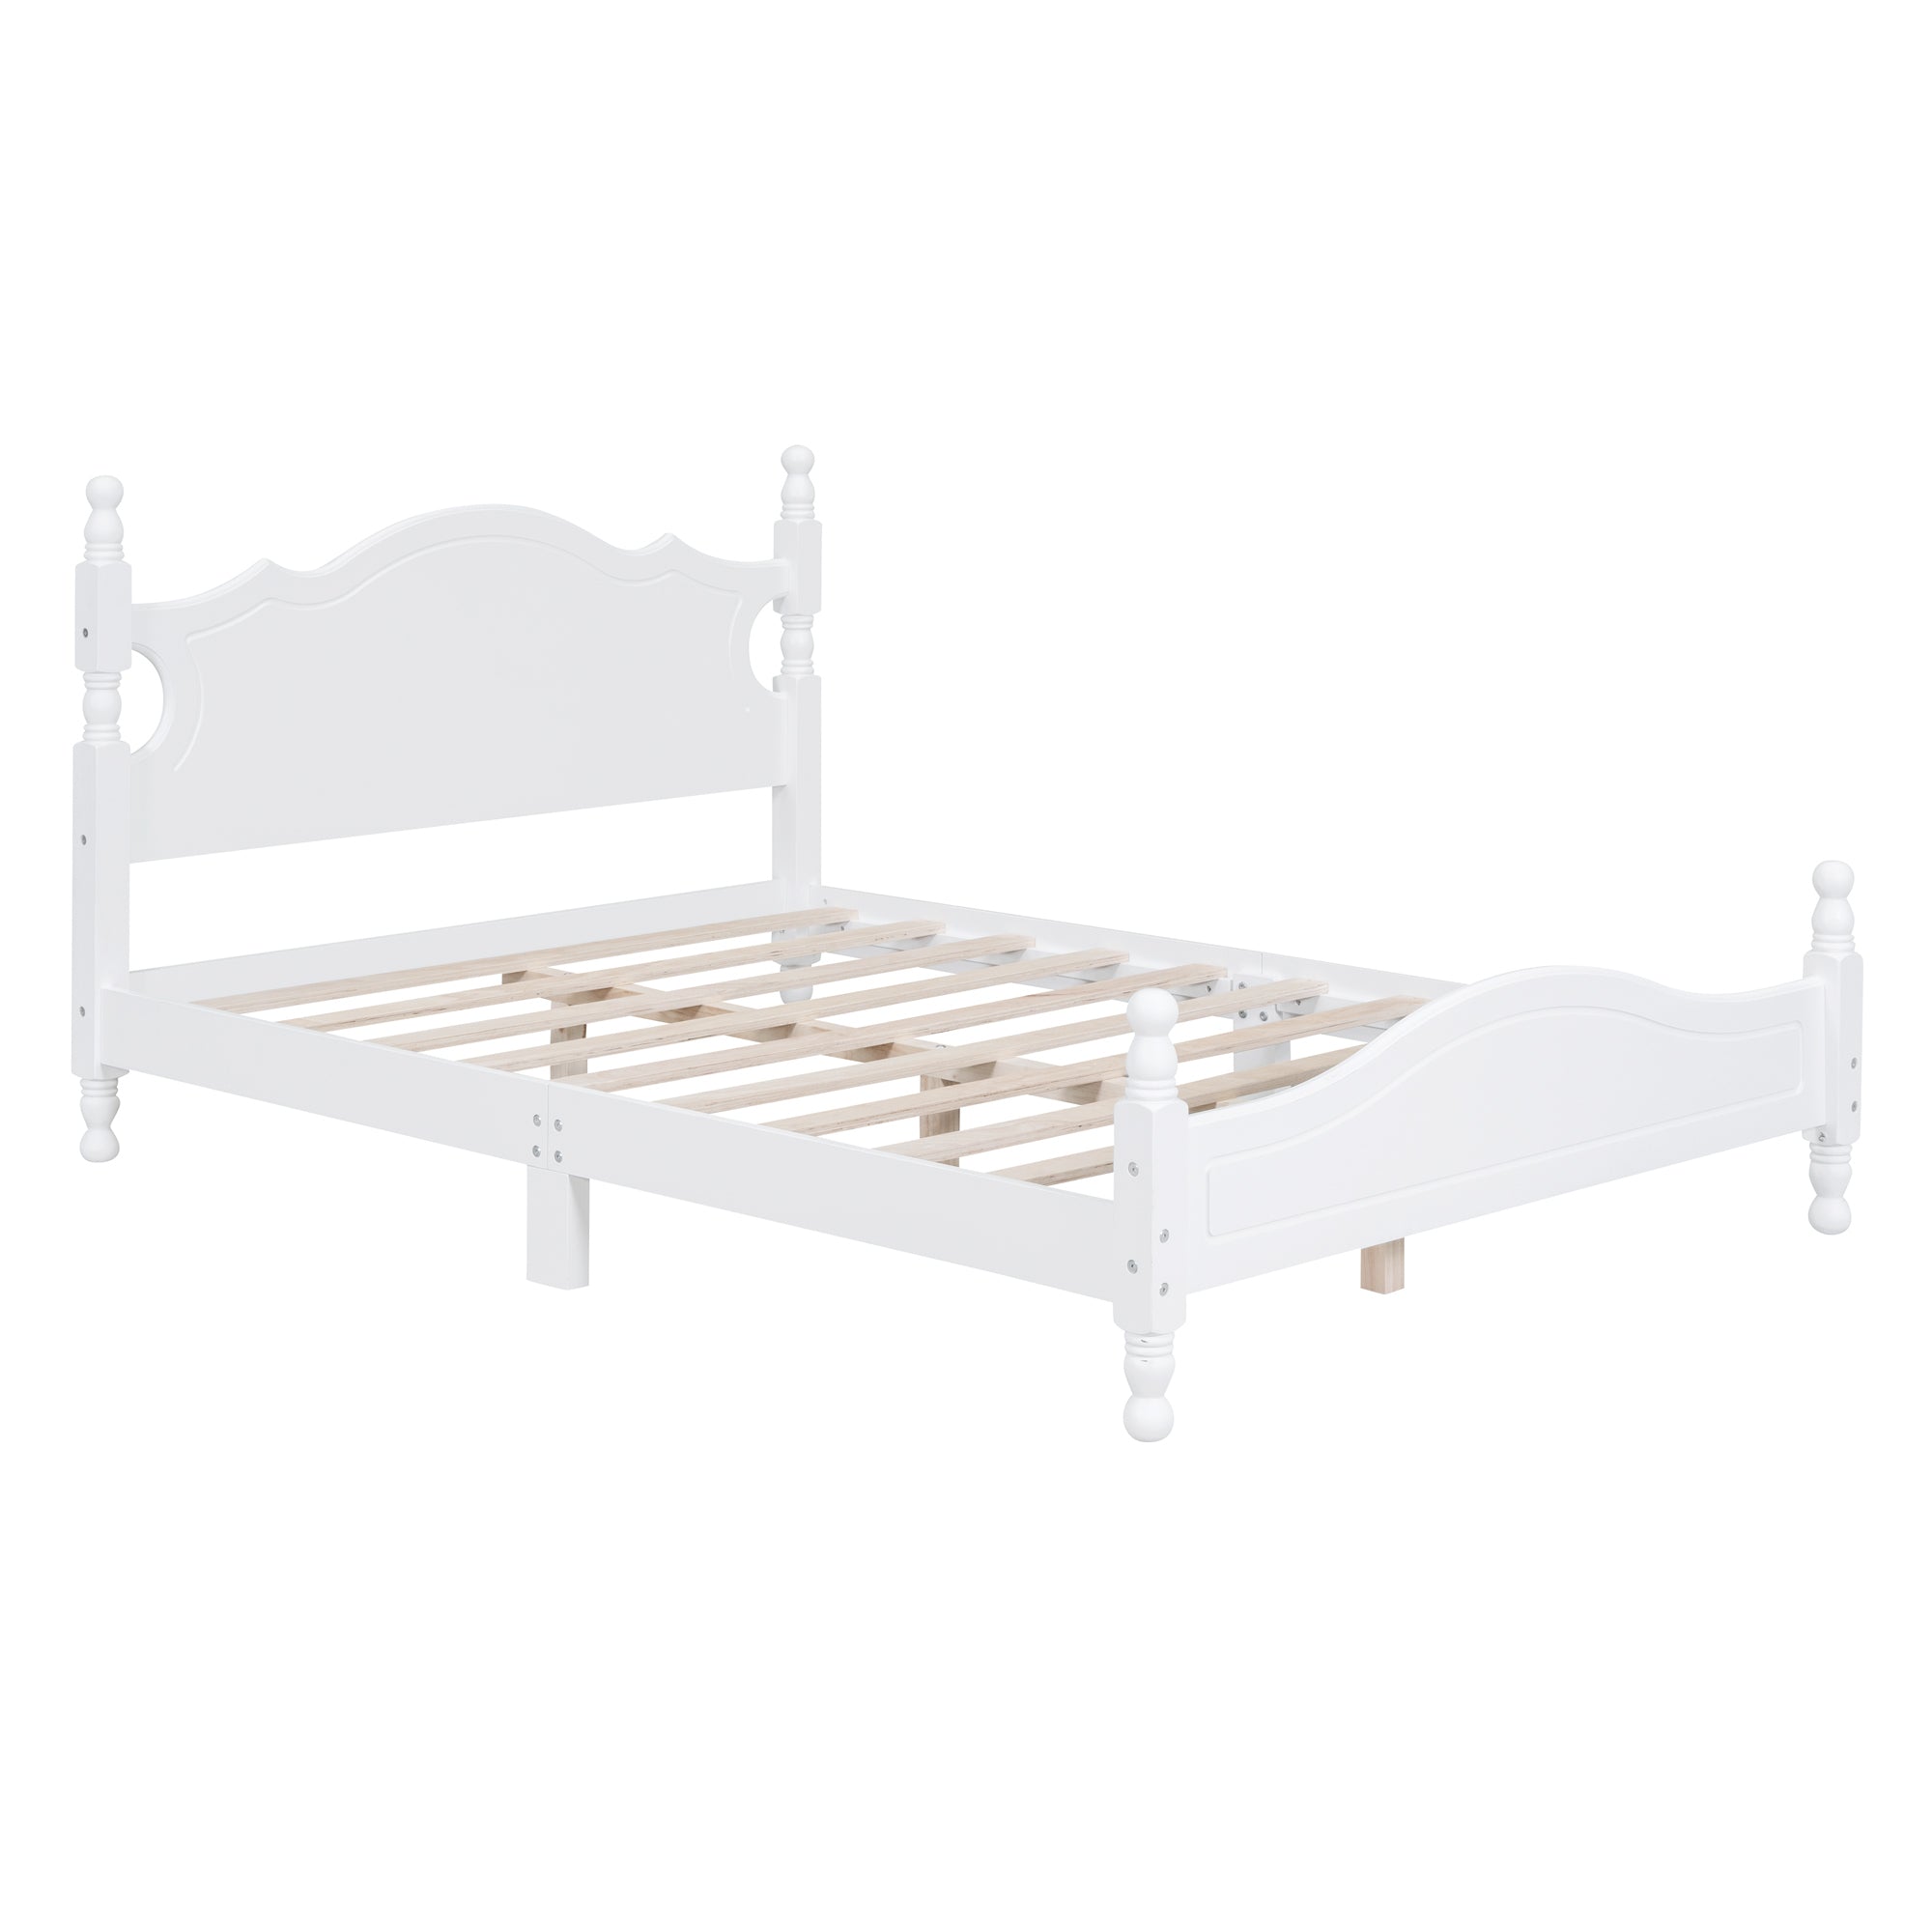 Full Size Wood Platform Bed Frame with Wooden Slat Support - White